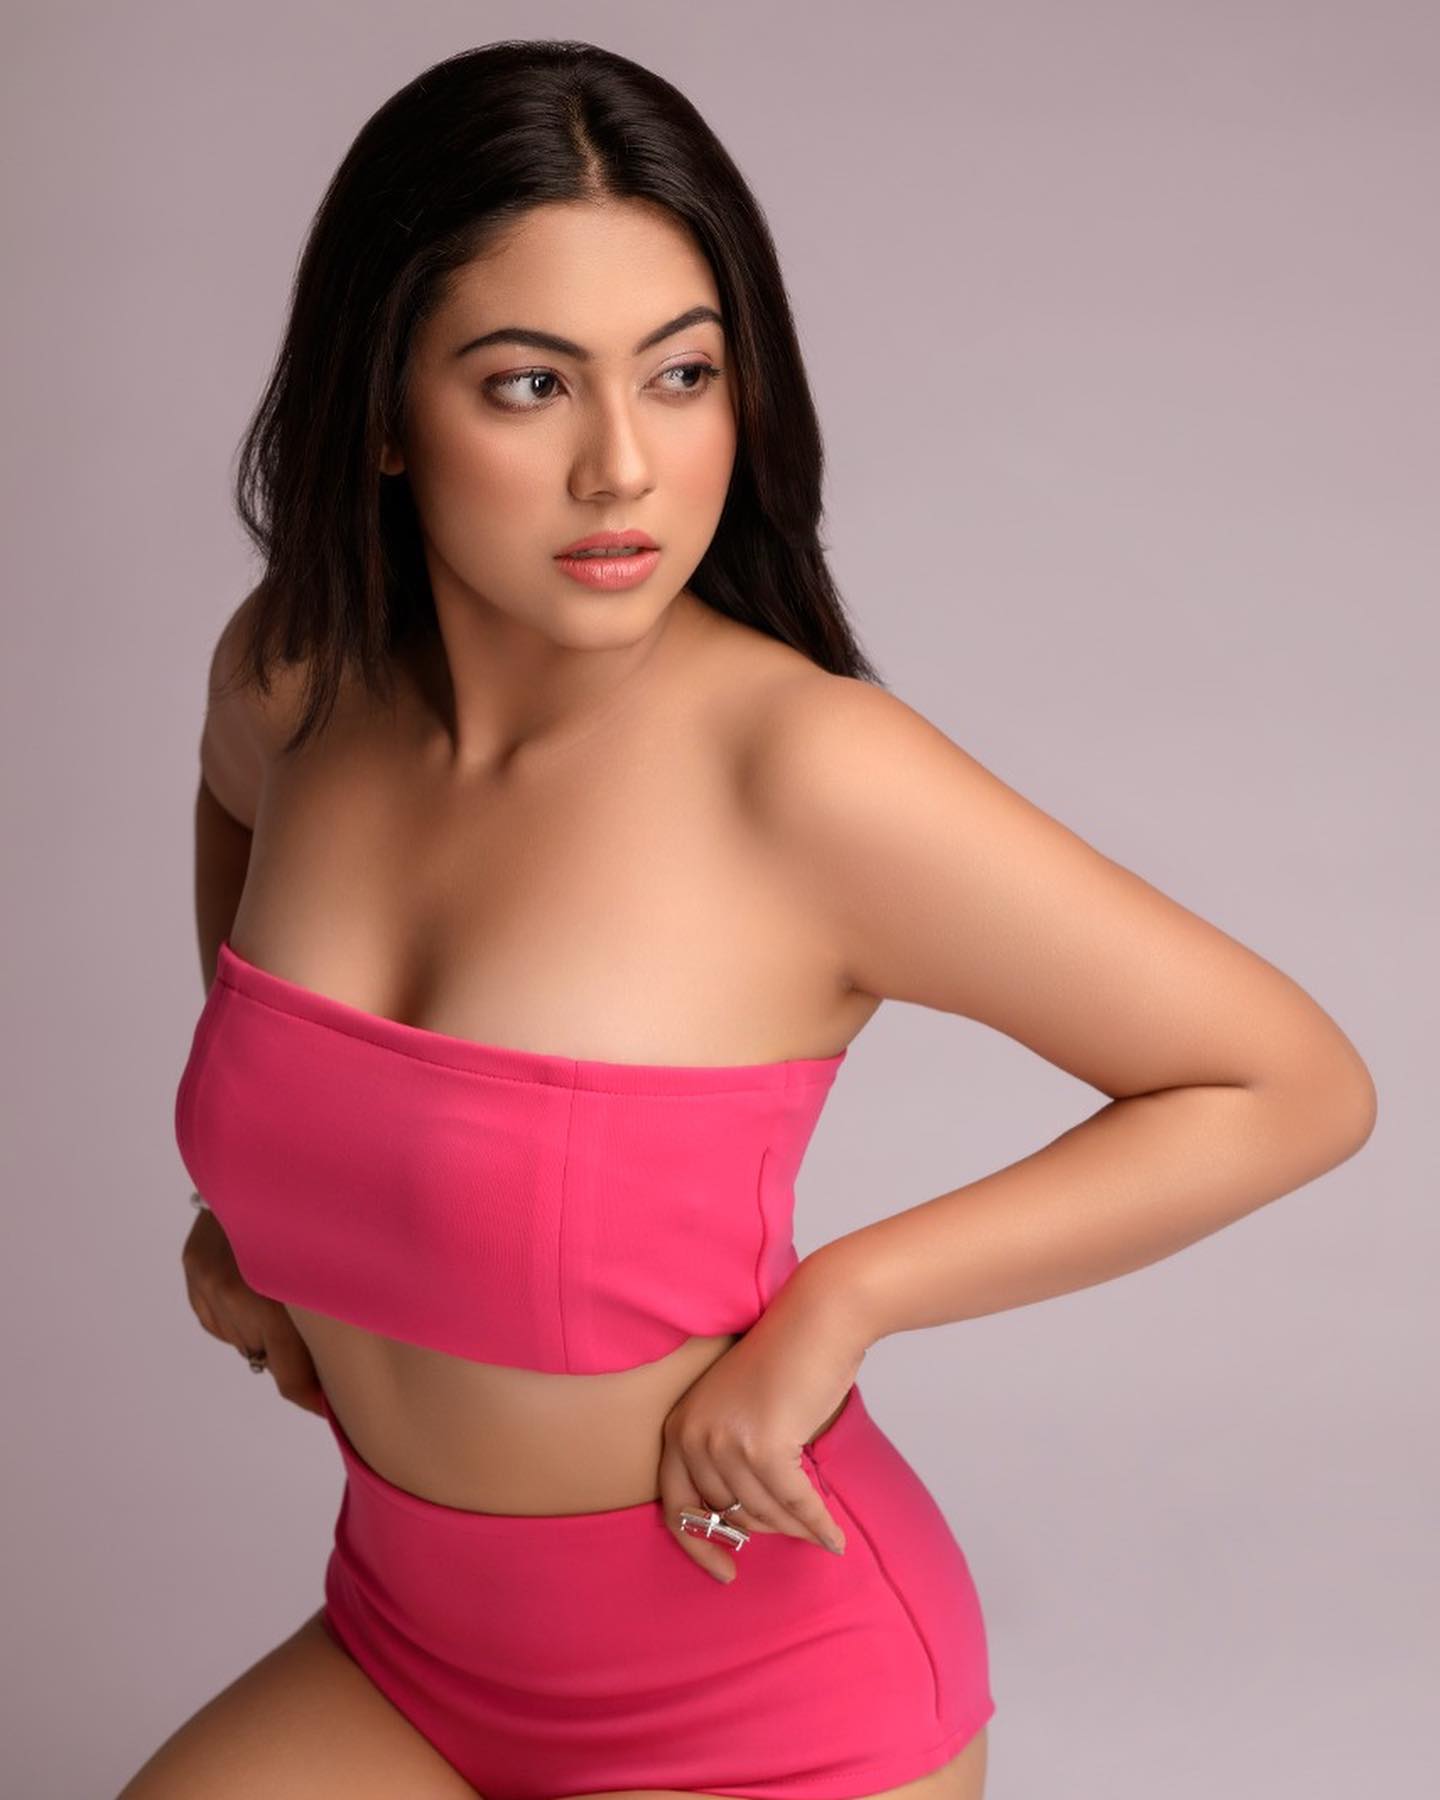 Actress Reem Shaikh sexy pink tank top and panty